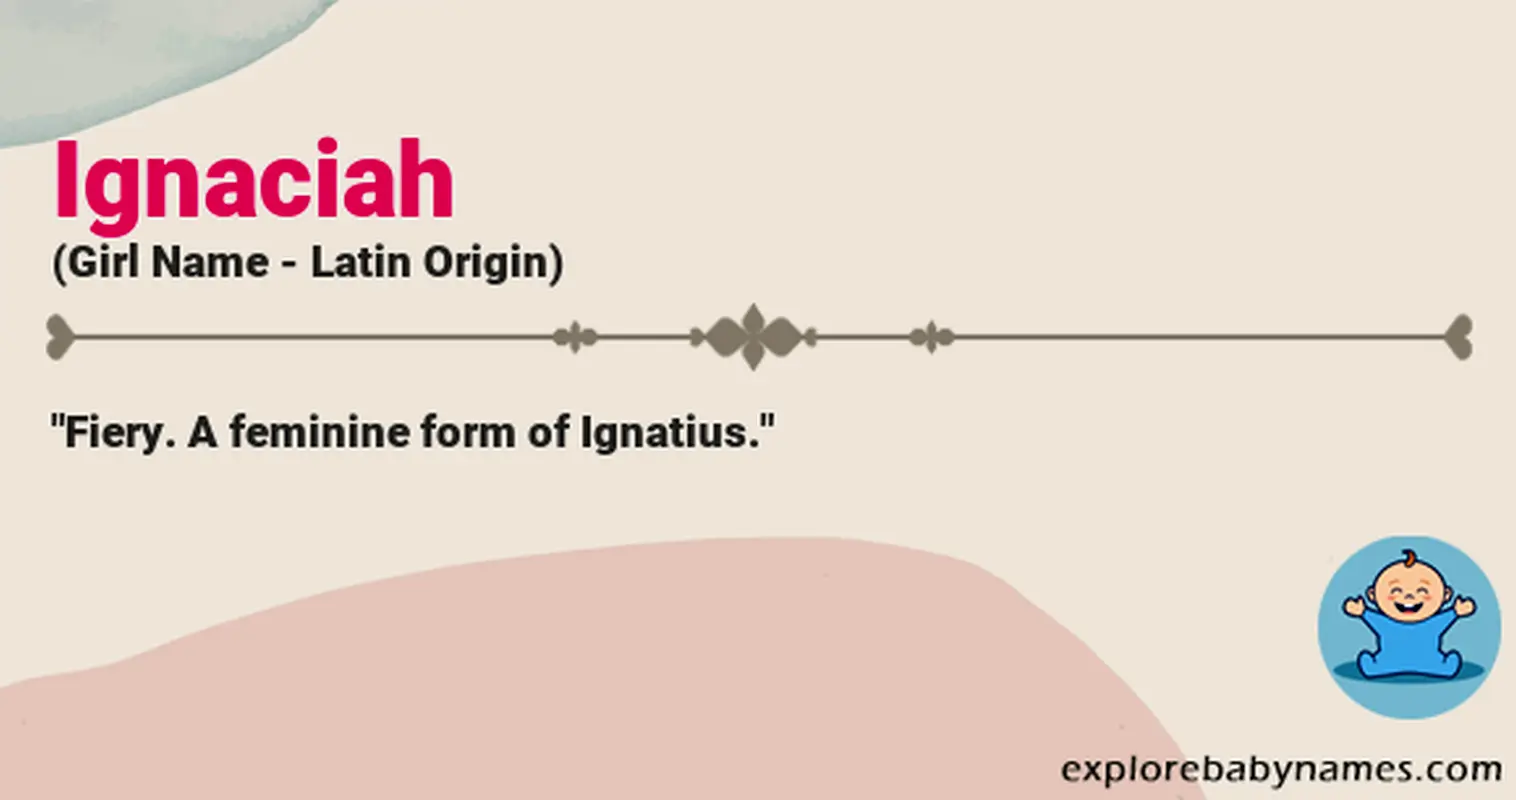 Meaning of Ignaciah